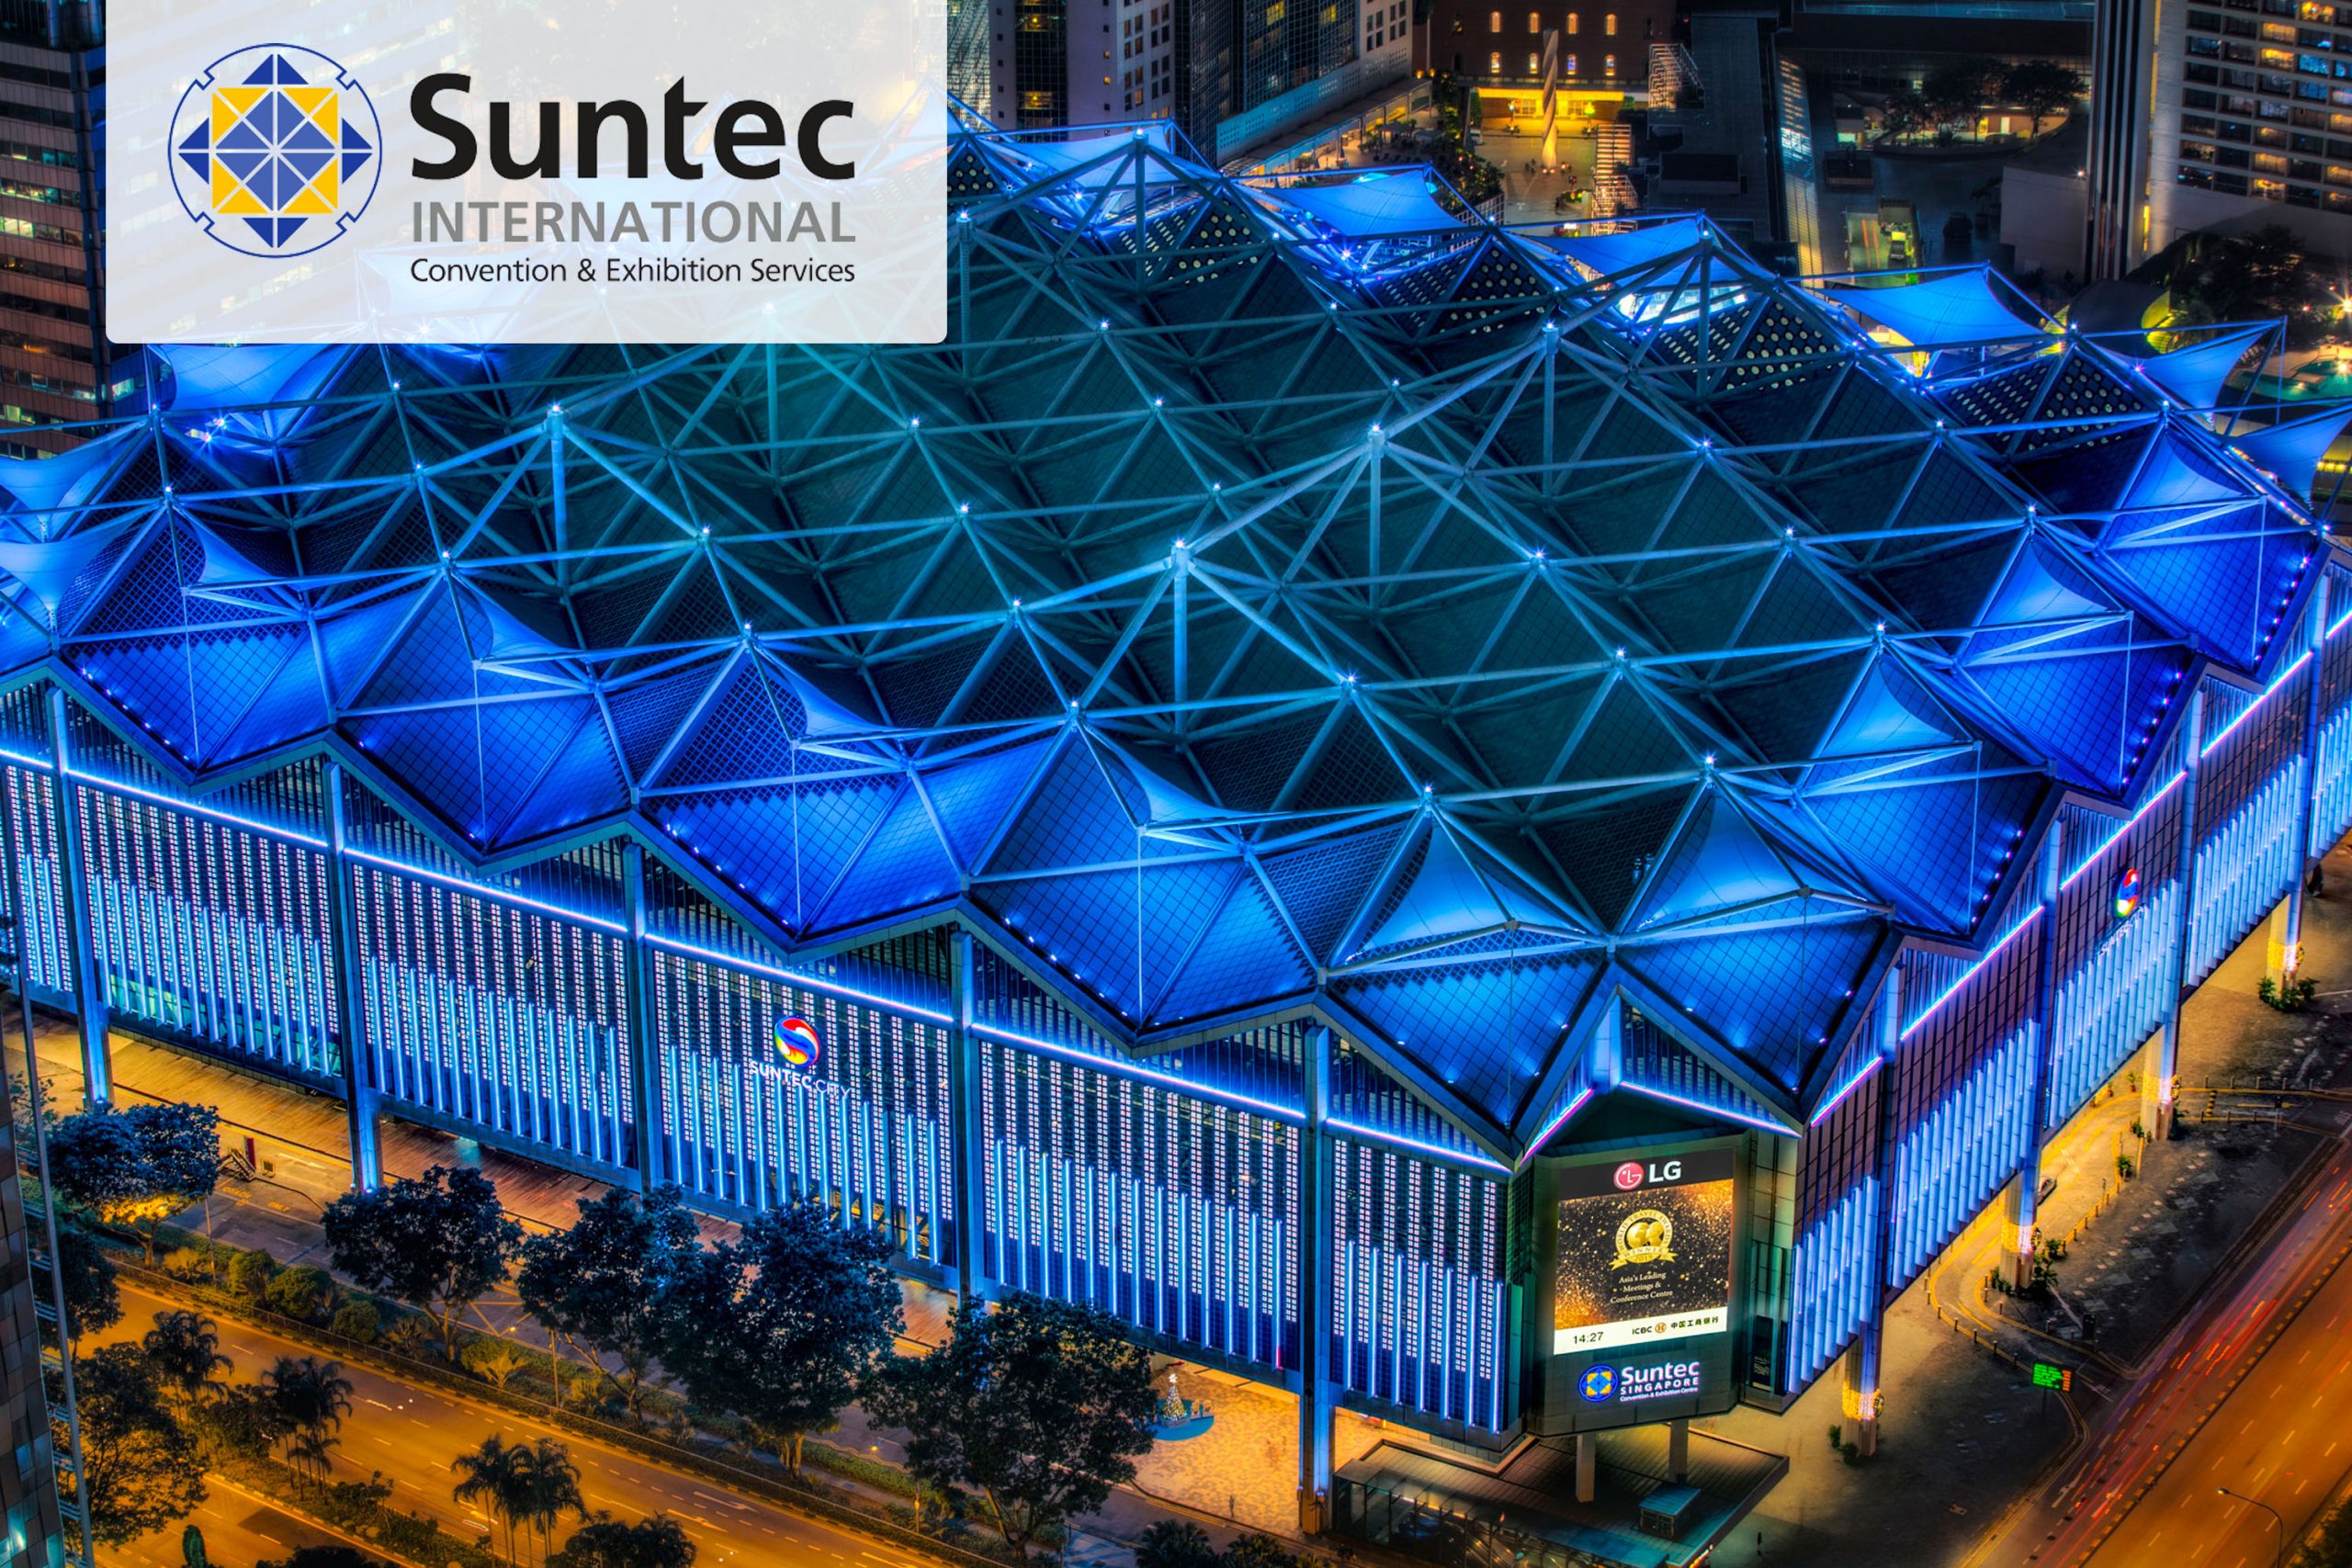 Suntec Singapore Convention and Exhibition Centre